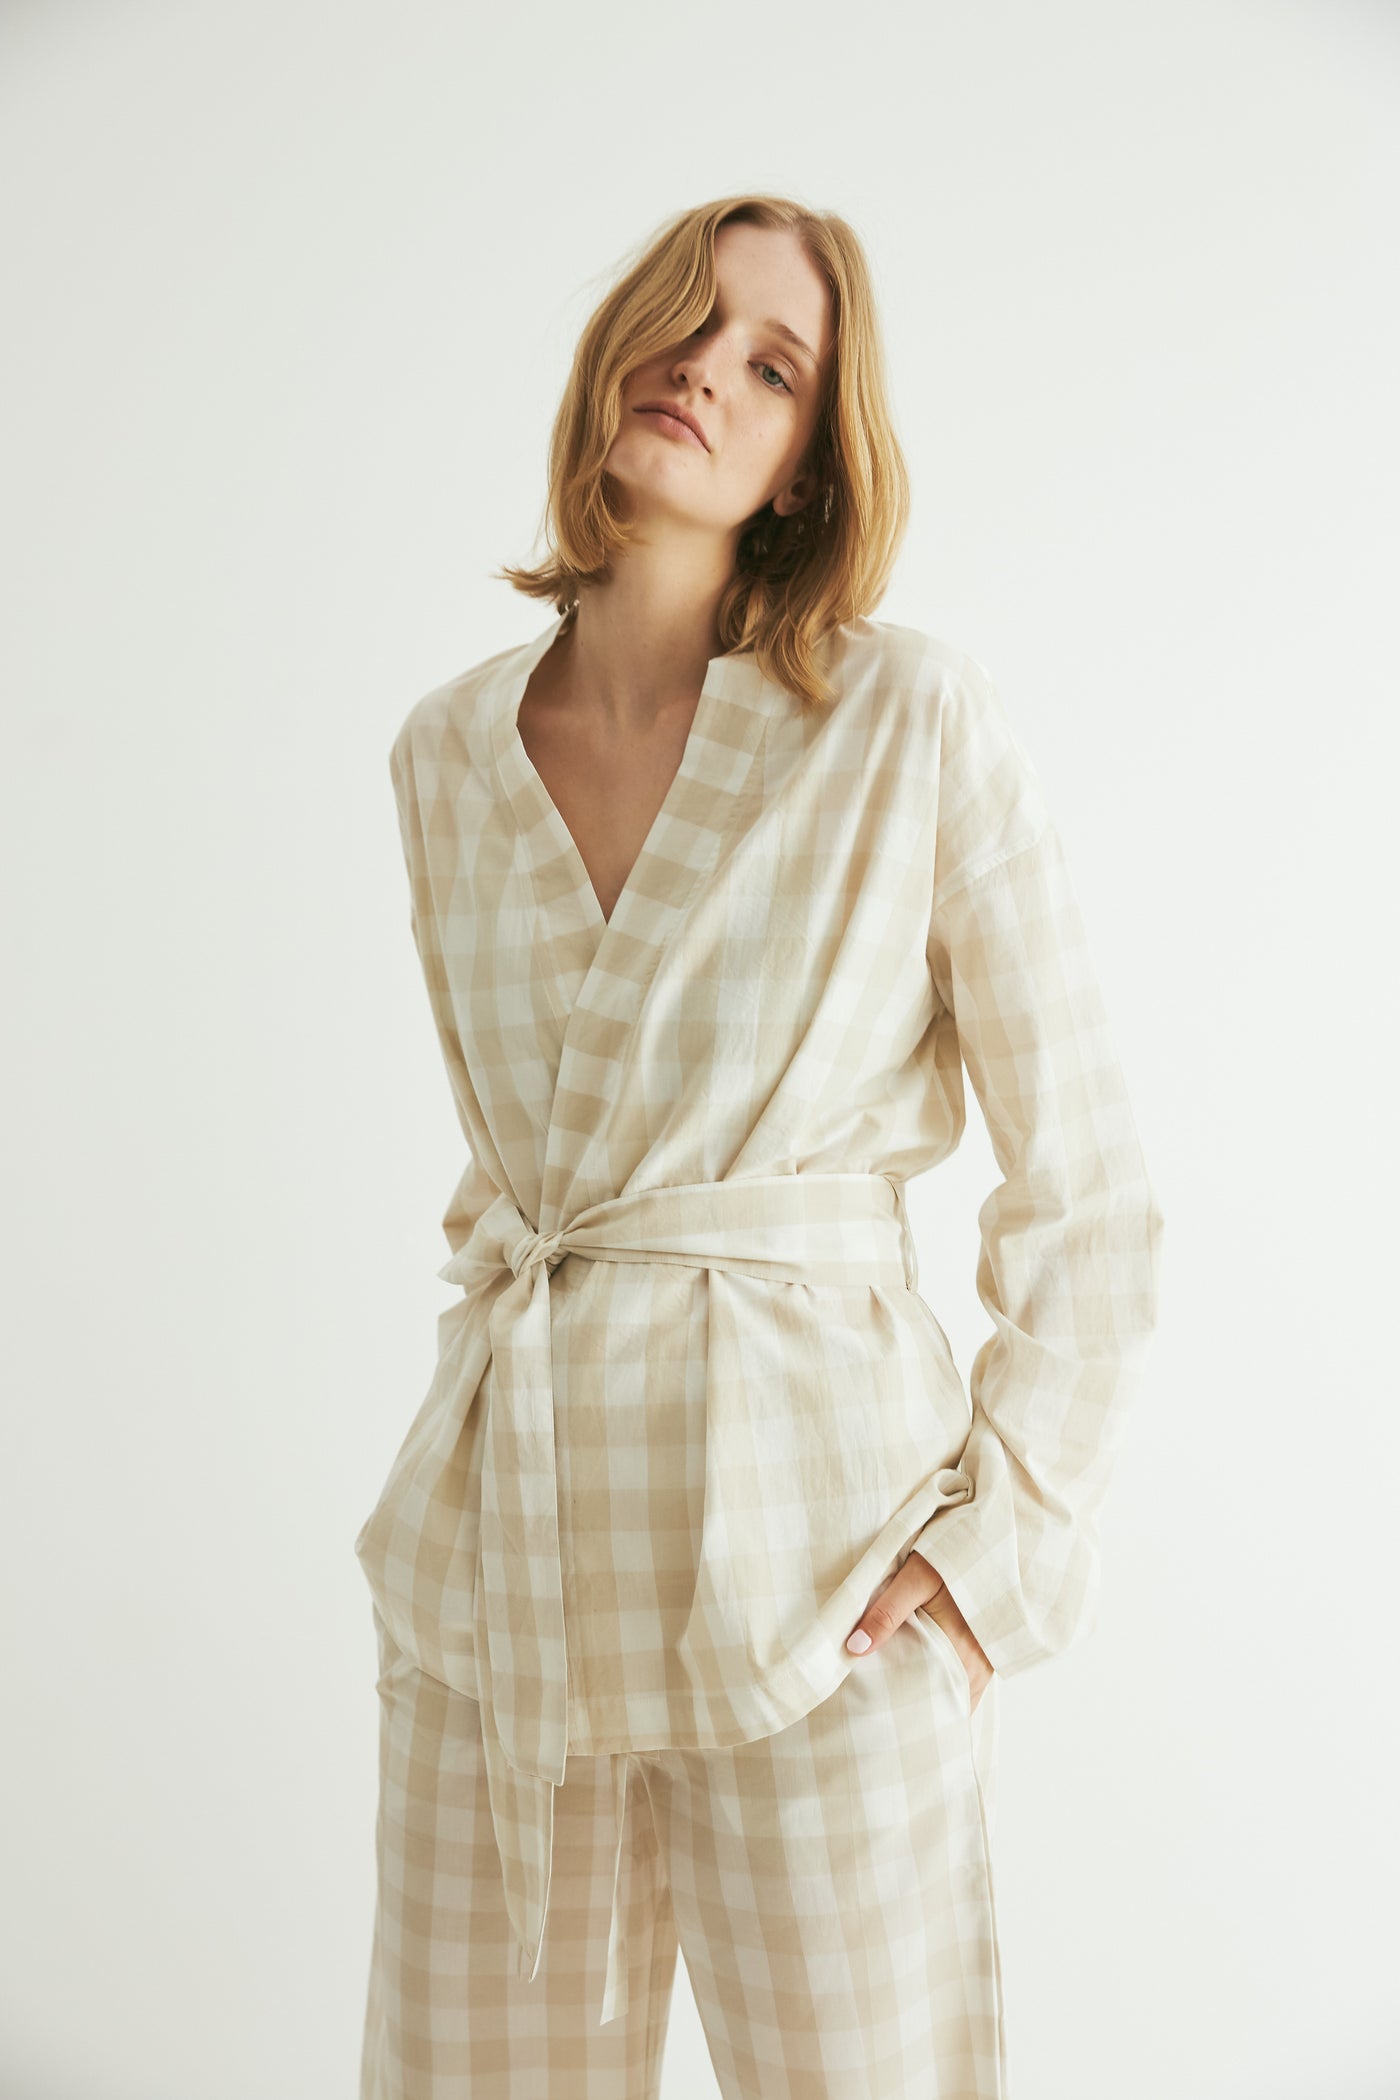 Organic cotton Wrap Set by General Sleep. Sustainably made pyjamas